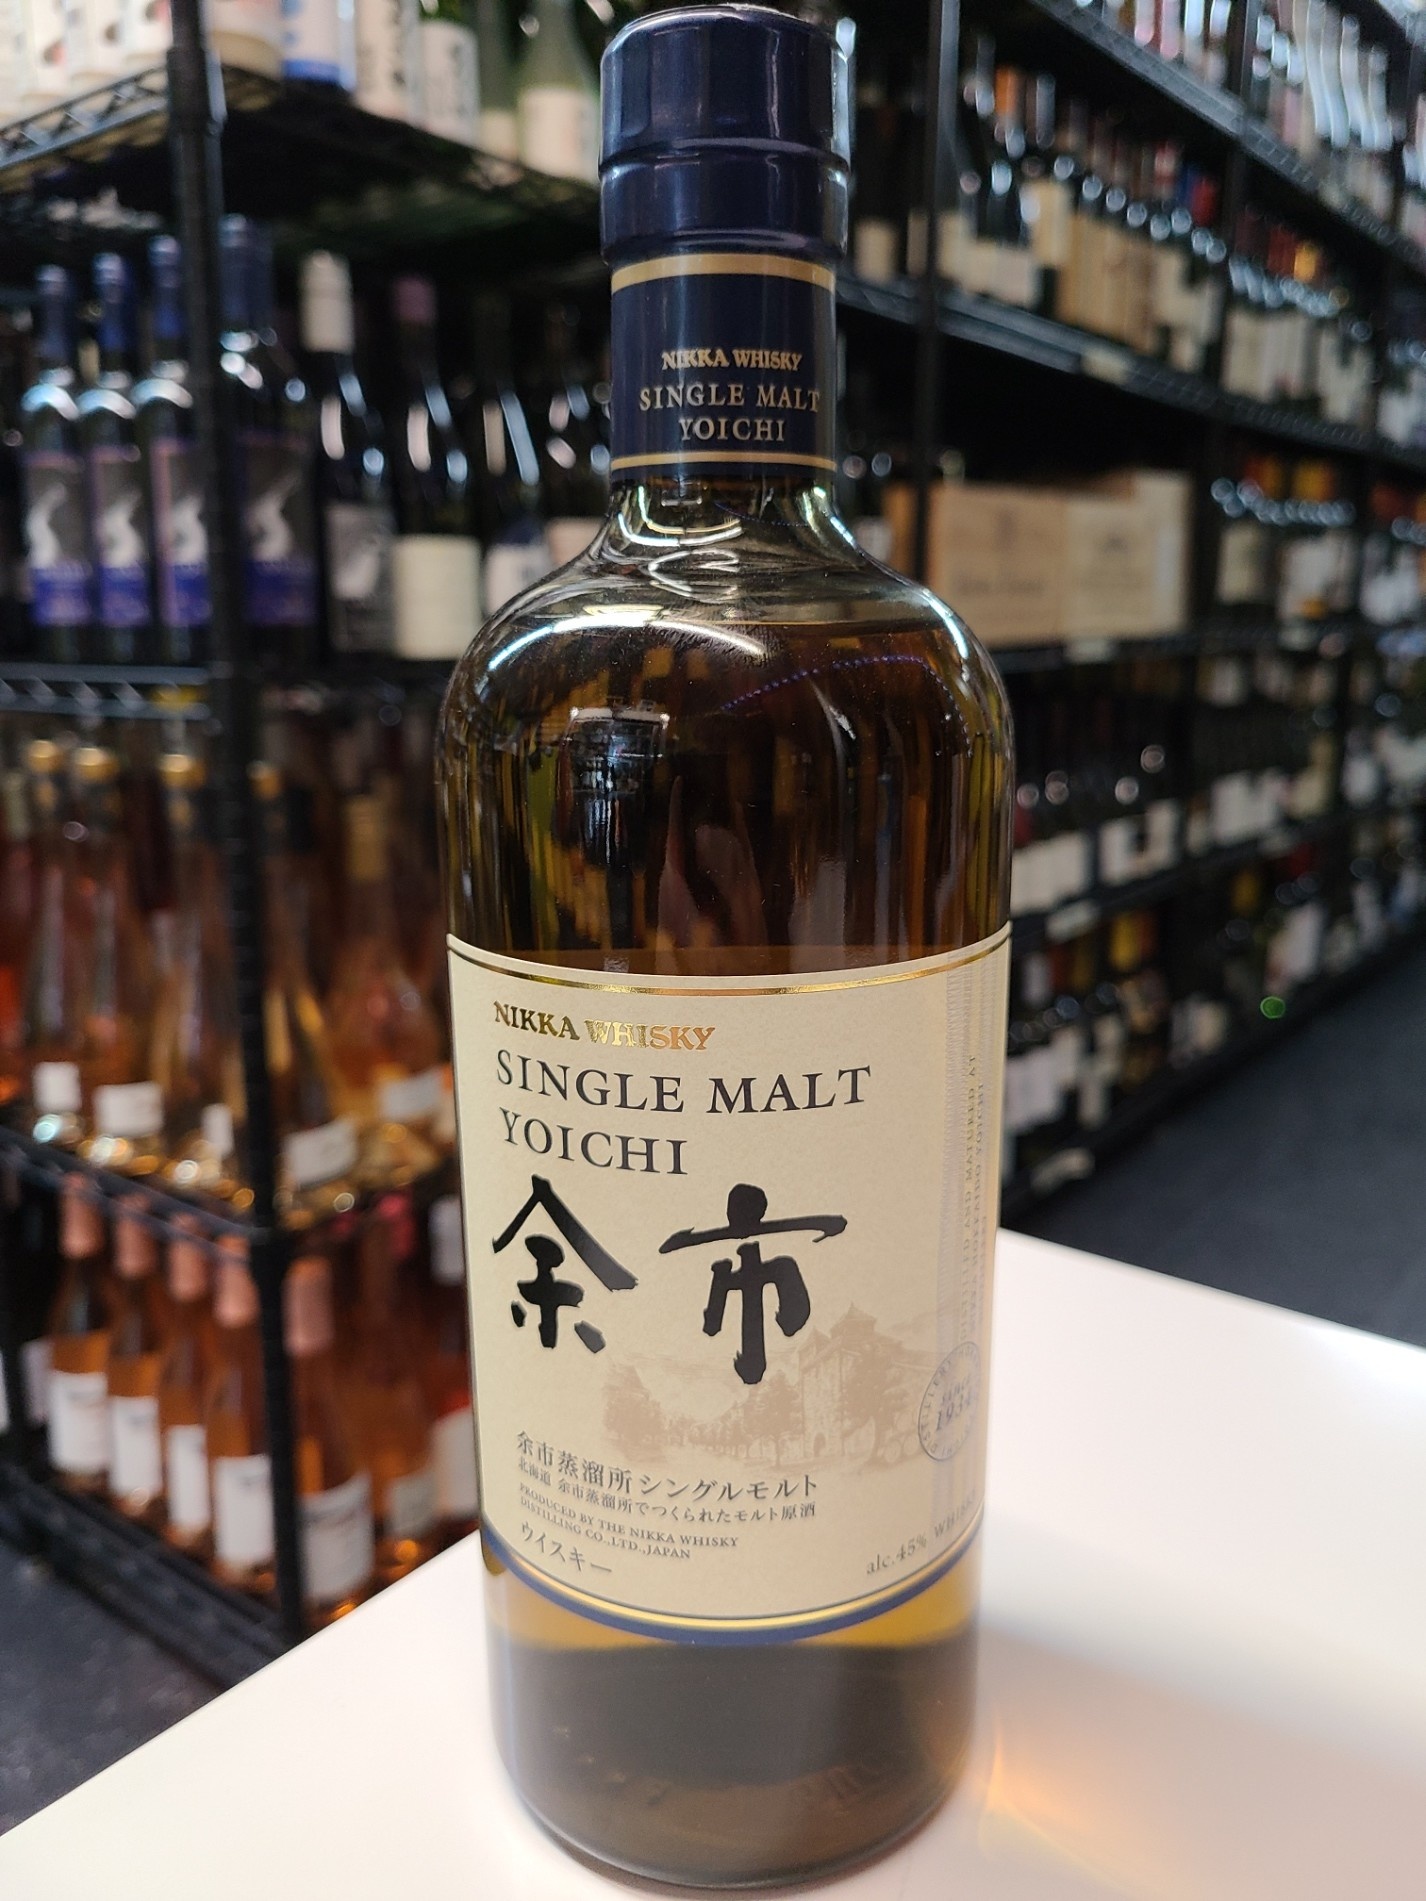 Nikka Yoichi Single Malt Whisky 750ml